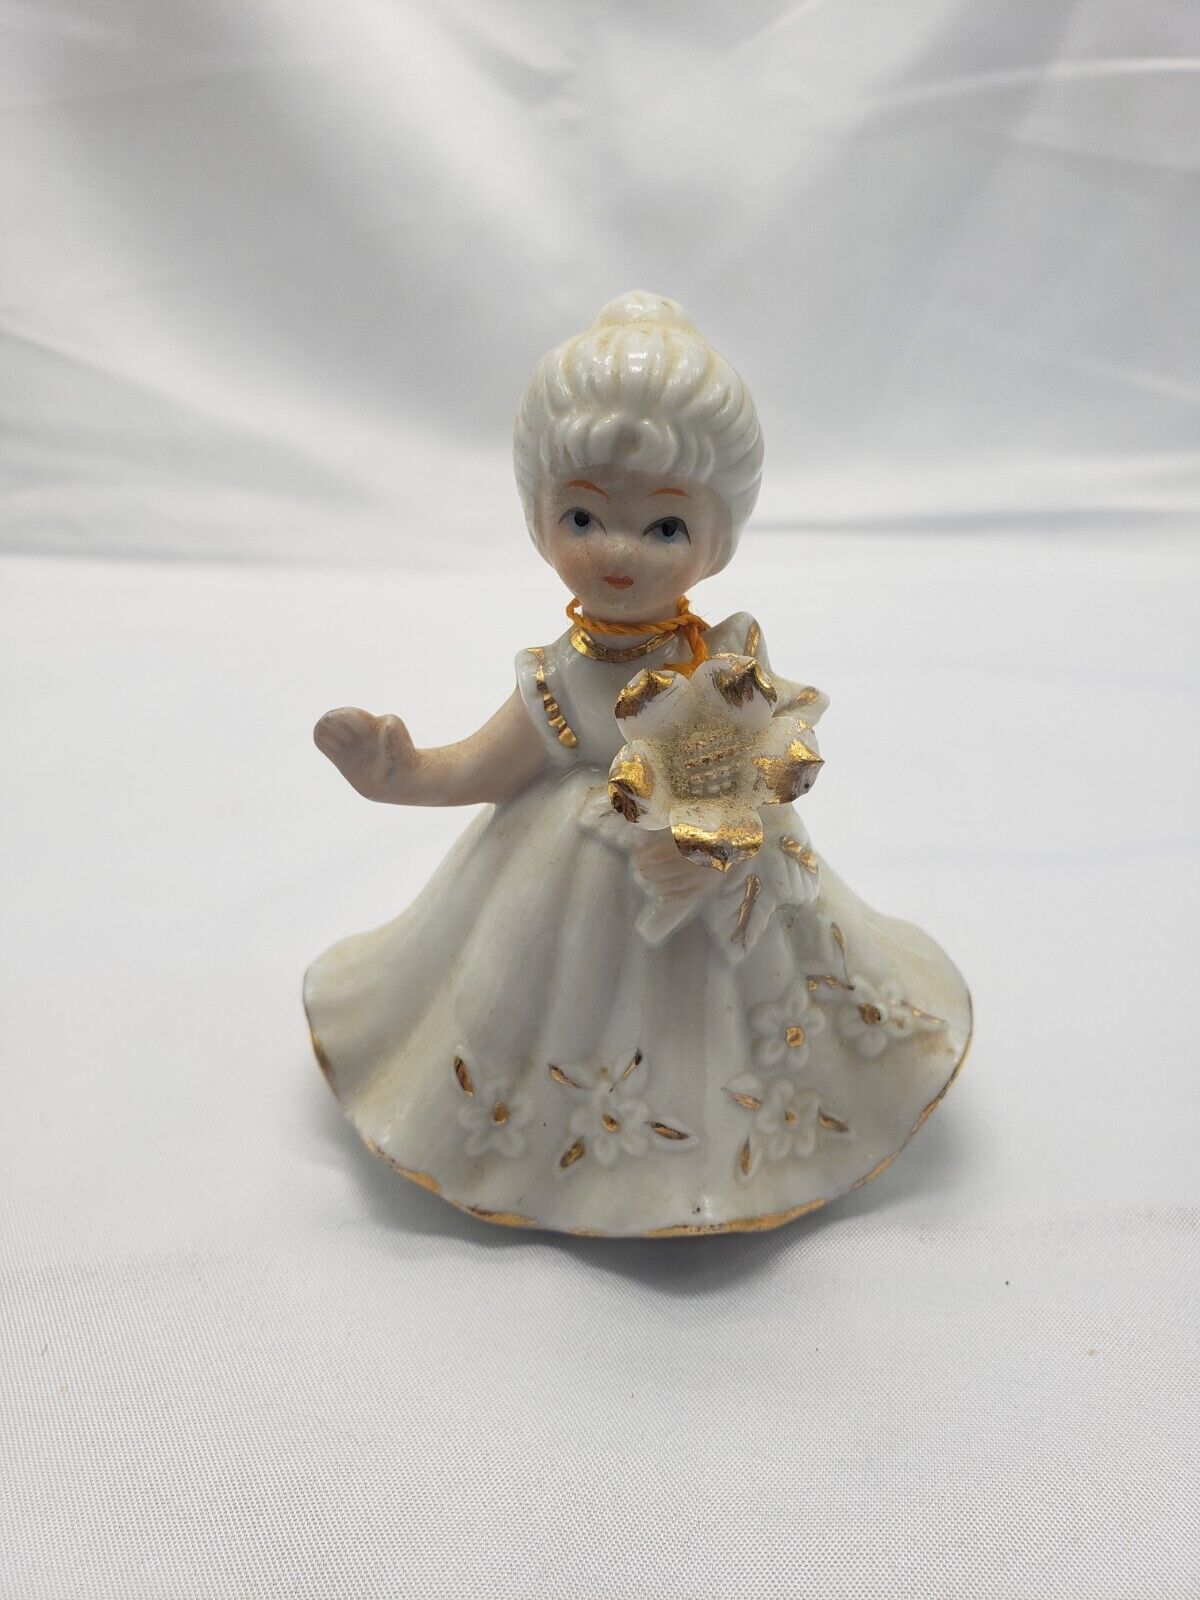 Vintage Napcoware Daffodil March Birthday Girl Figurine